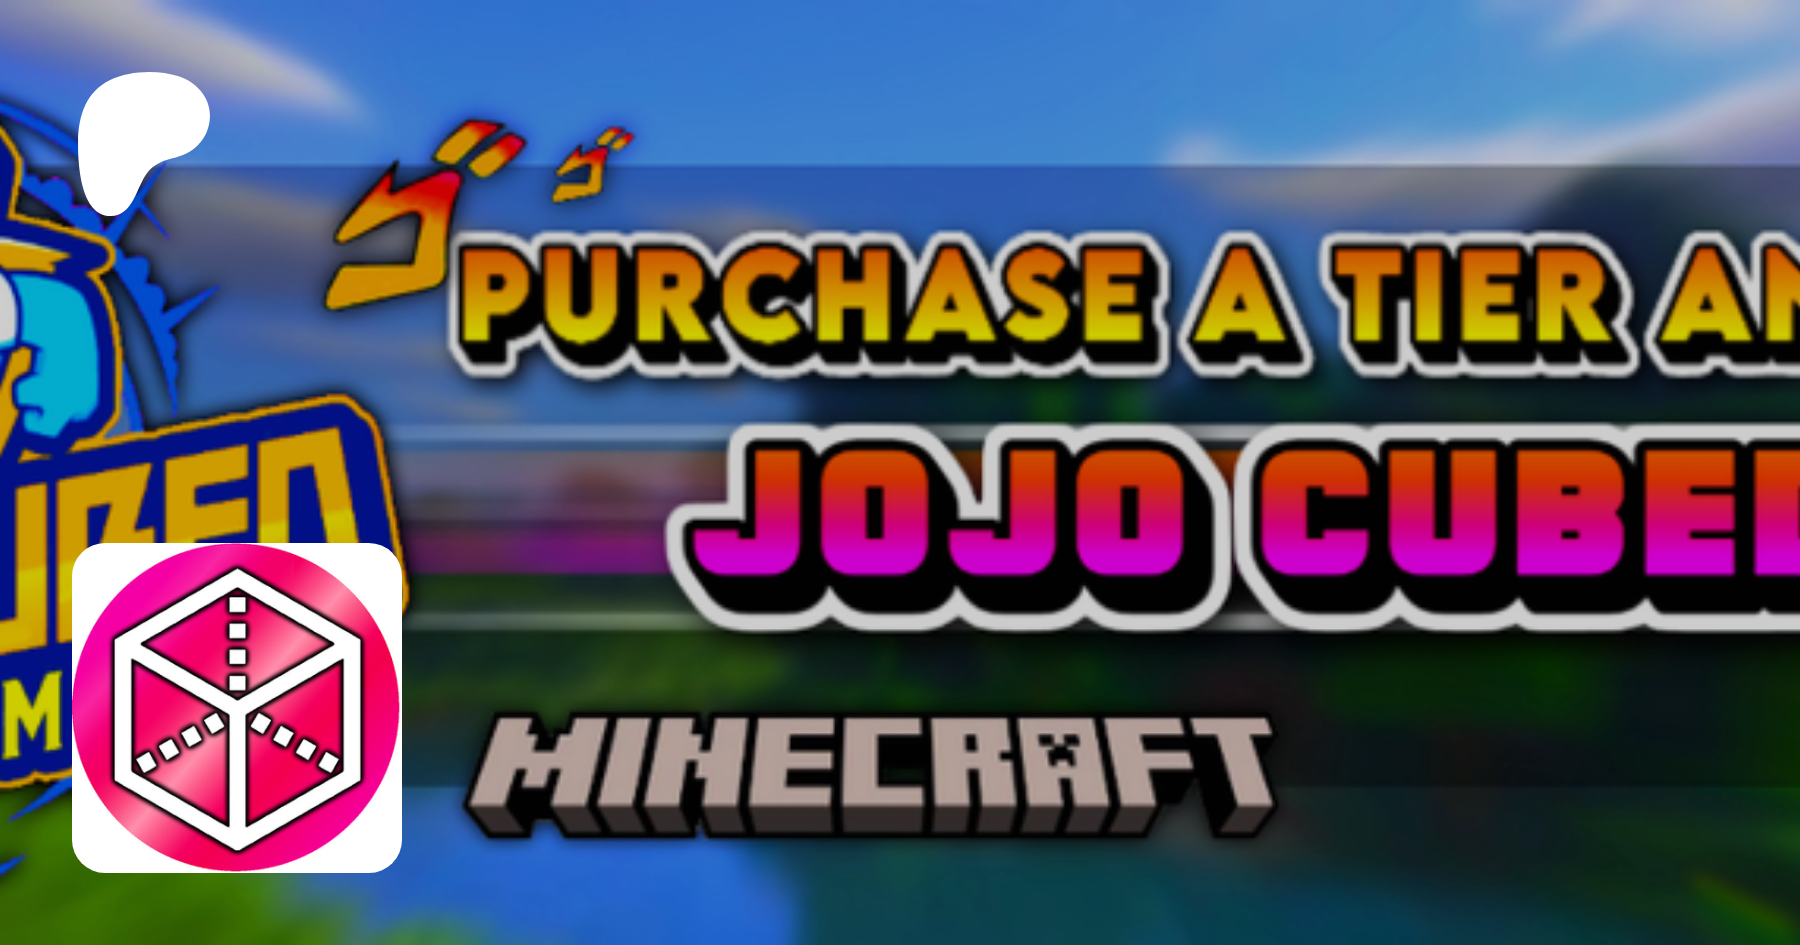 The JOJO Cubed Minecraft Datapack